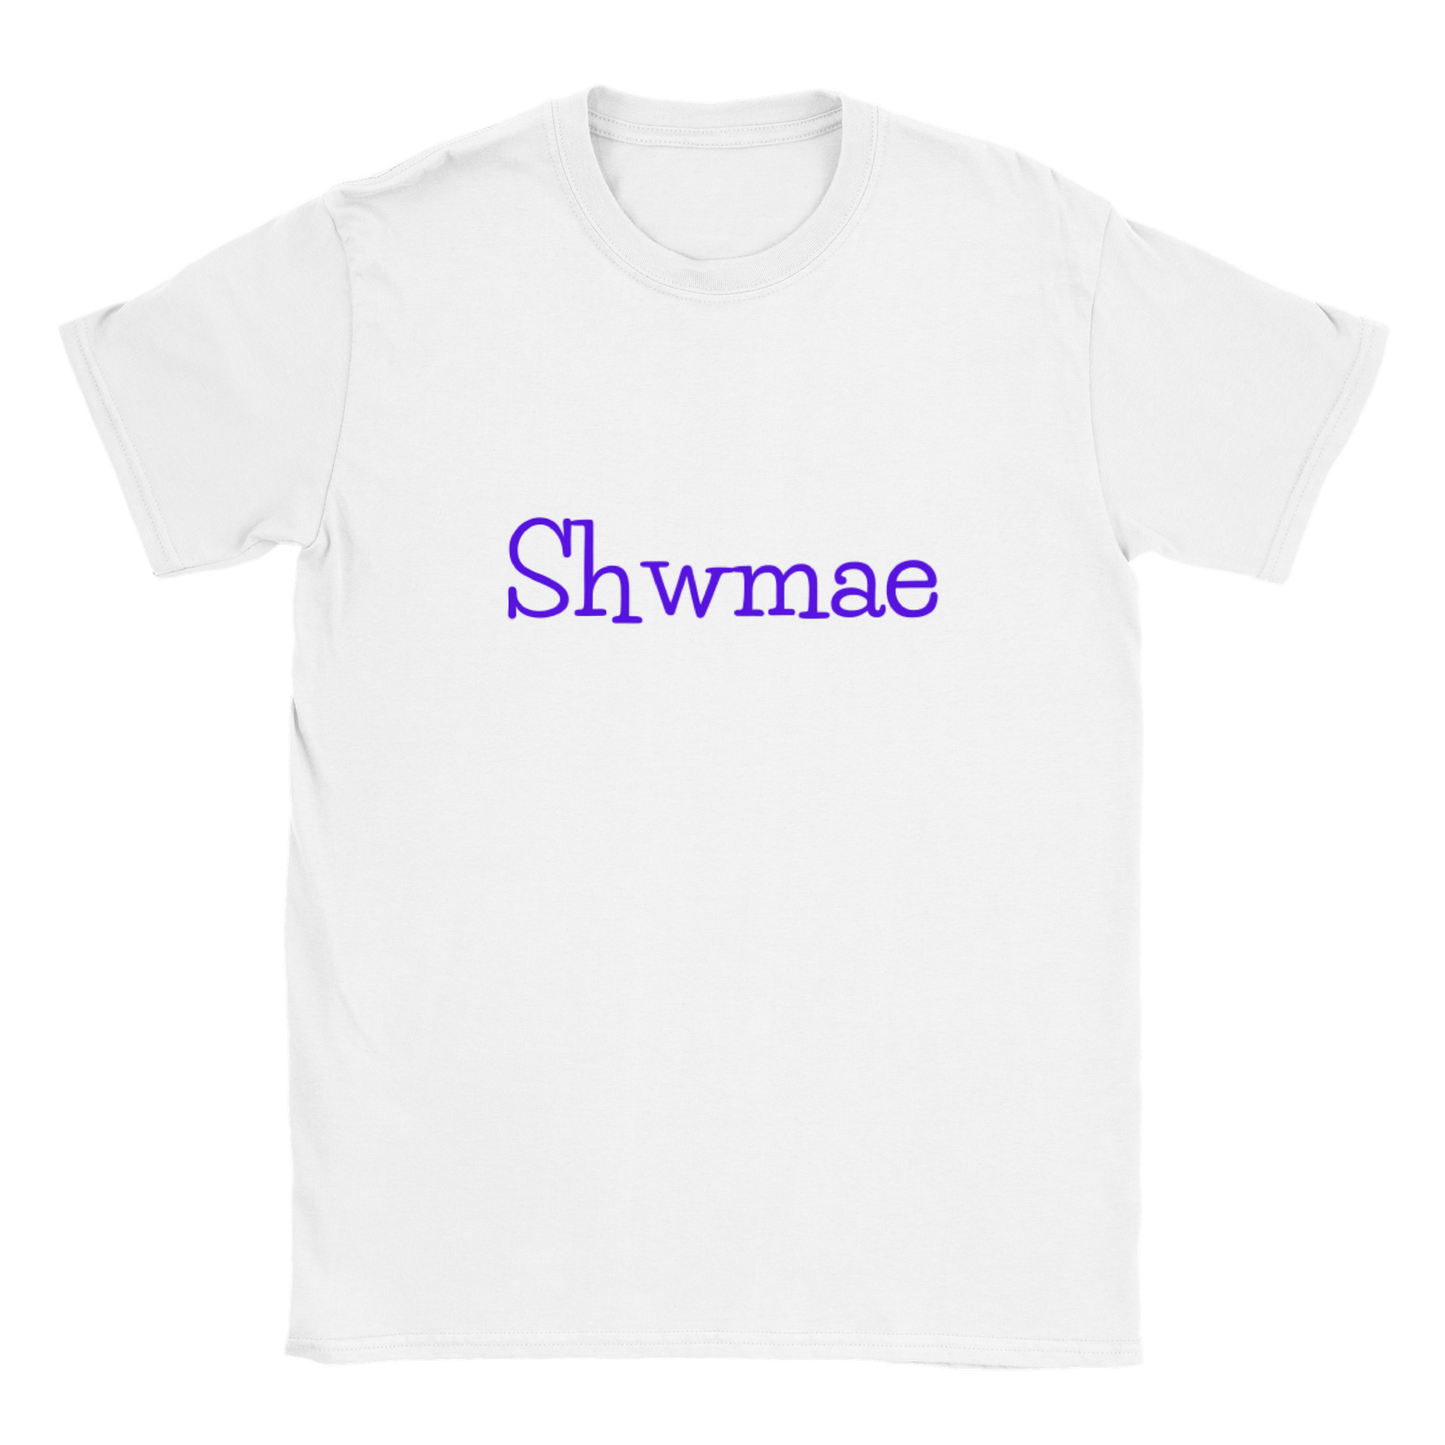 Shwmae - Welsh language kids unisex T-shirt/ crys-T Cymraeg